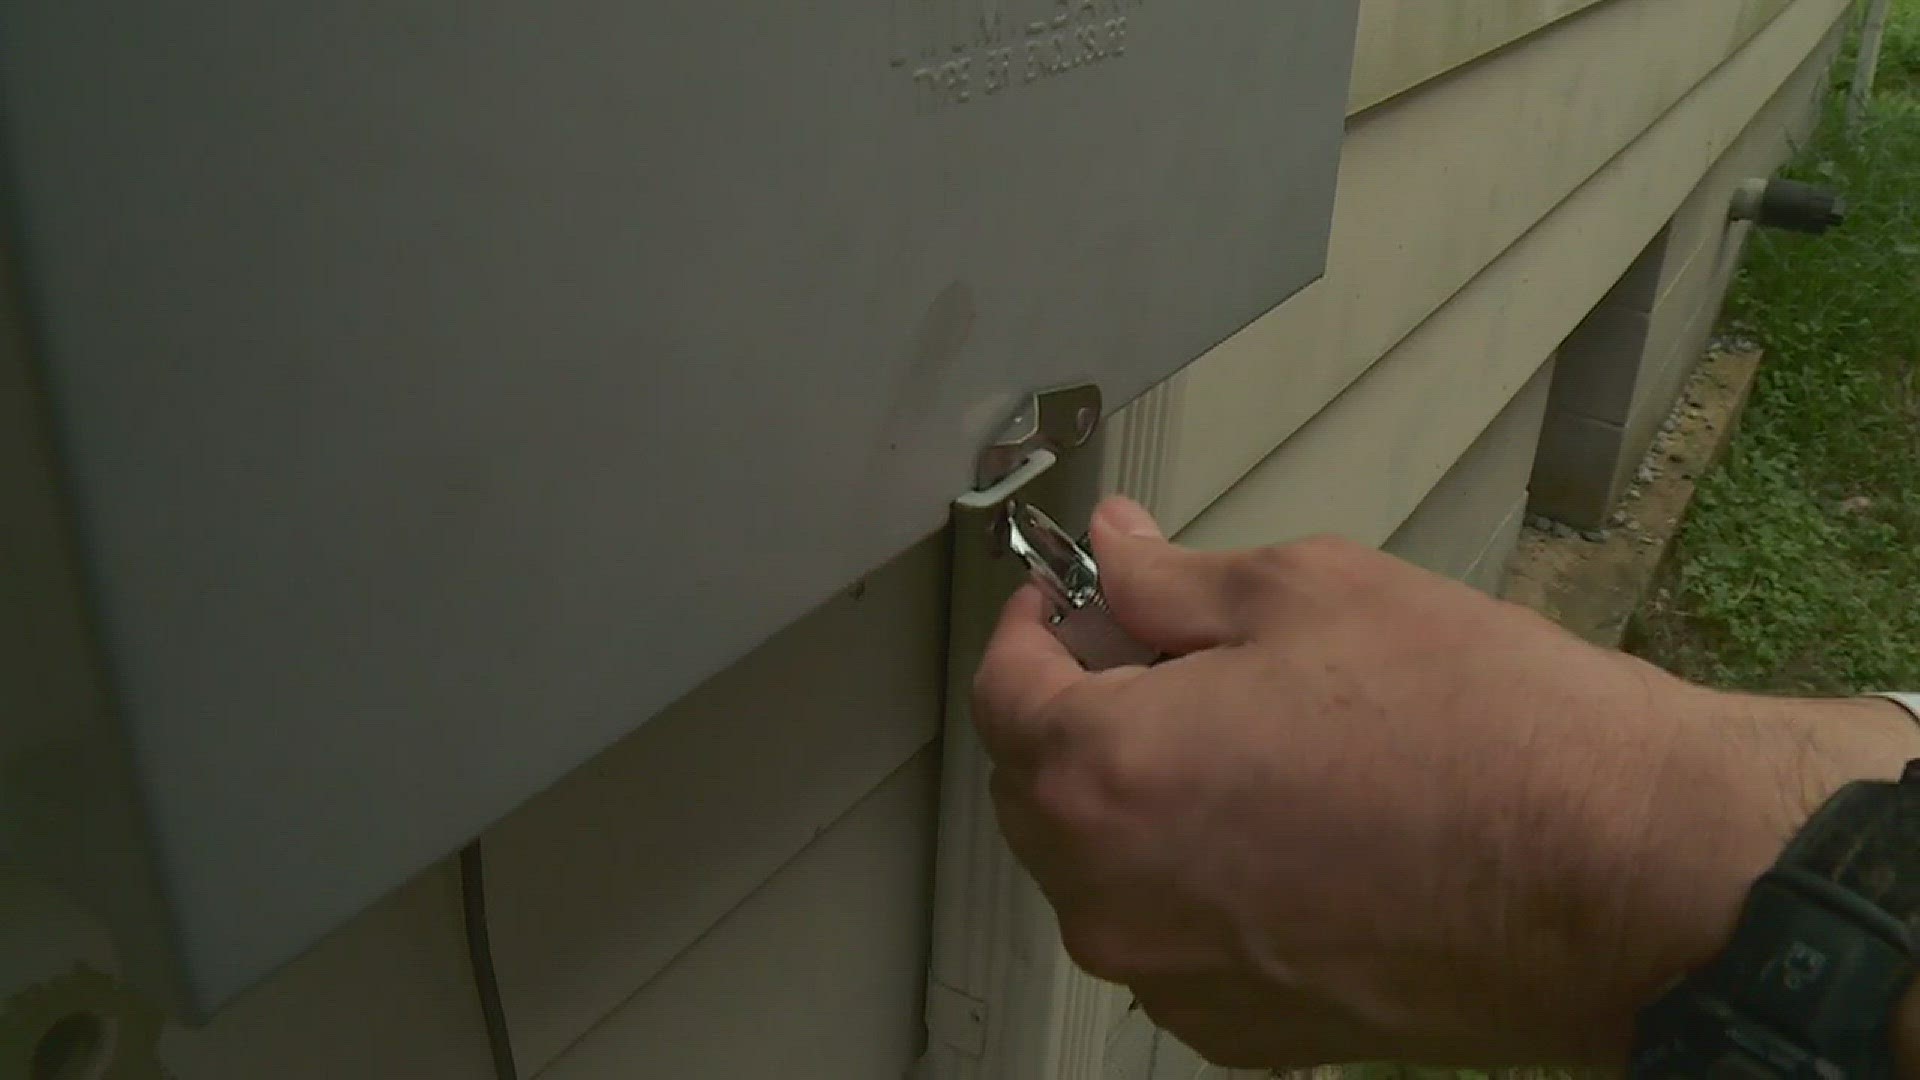 Paul Murphy talks to residents in a neighborhood where burglars cut power to homes before breaking in.